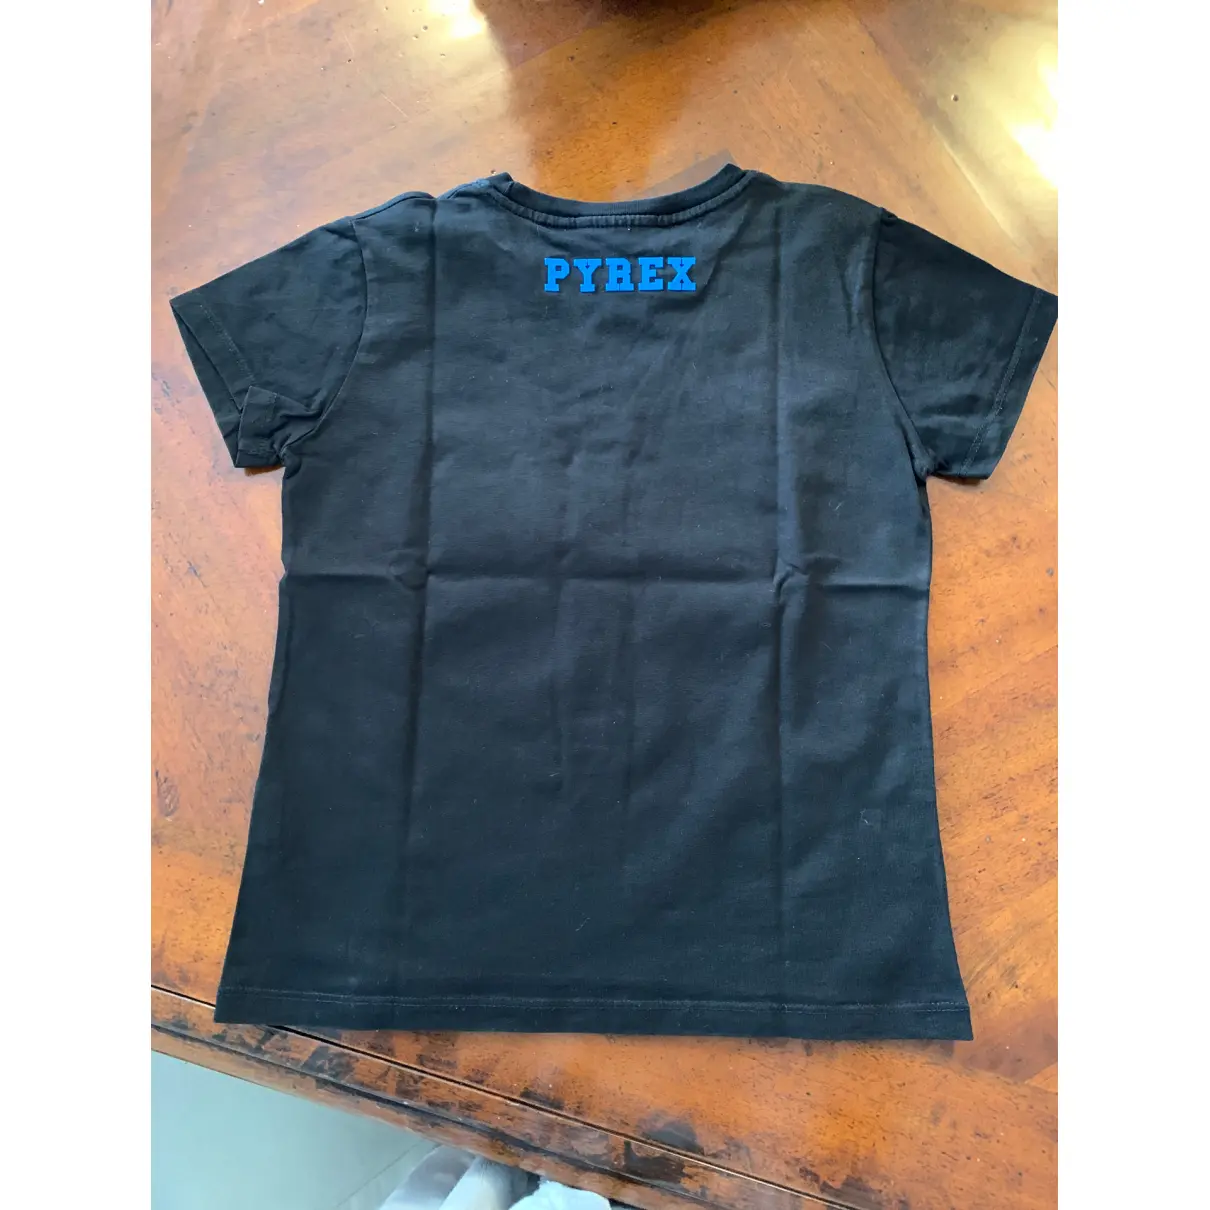 Buy Pyrex T-shirt online